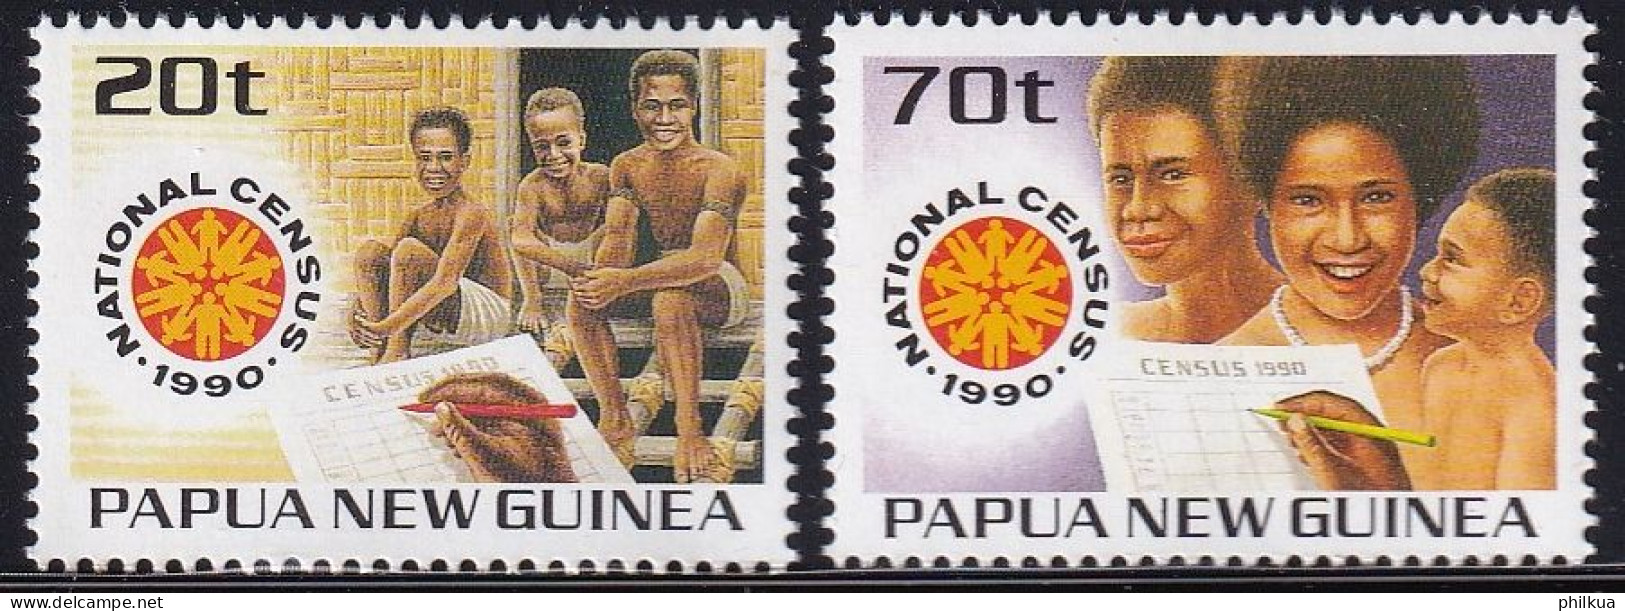 MiNr. 614 - 615 Papua-Neuguinea 1990, 2. Mai. Volkszählung - Postfrisch/**/MNH - Papua New Guinea